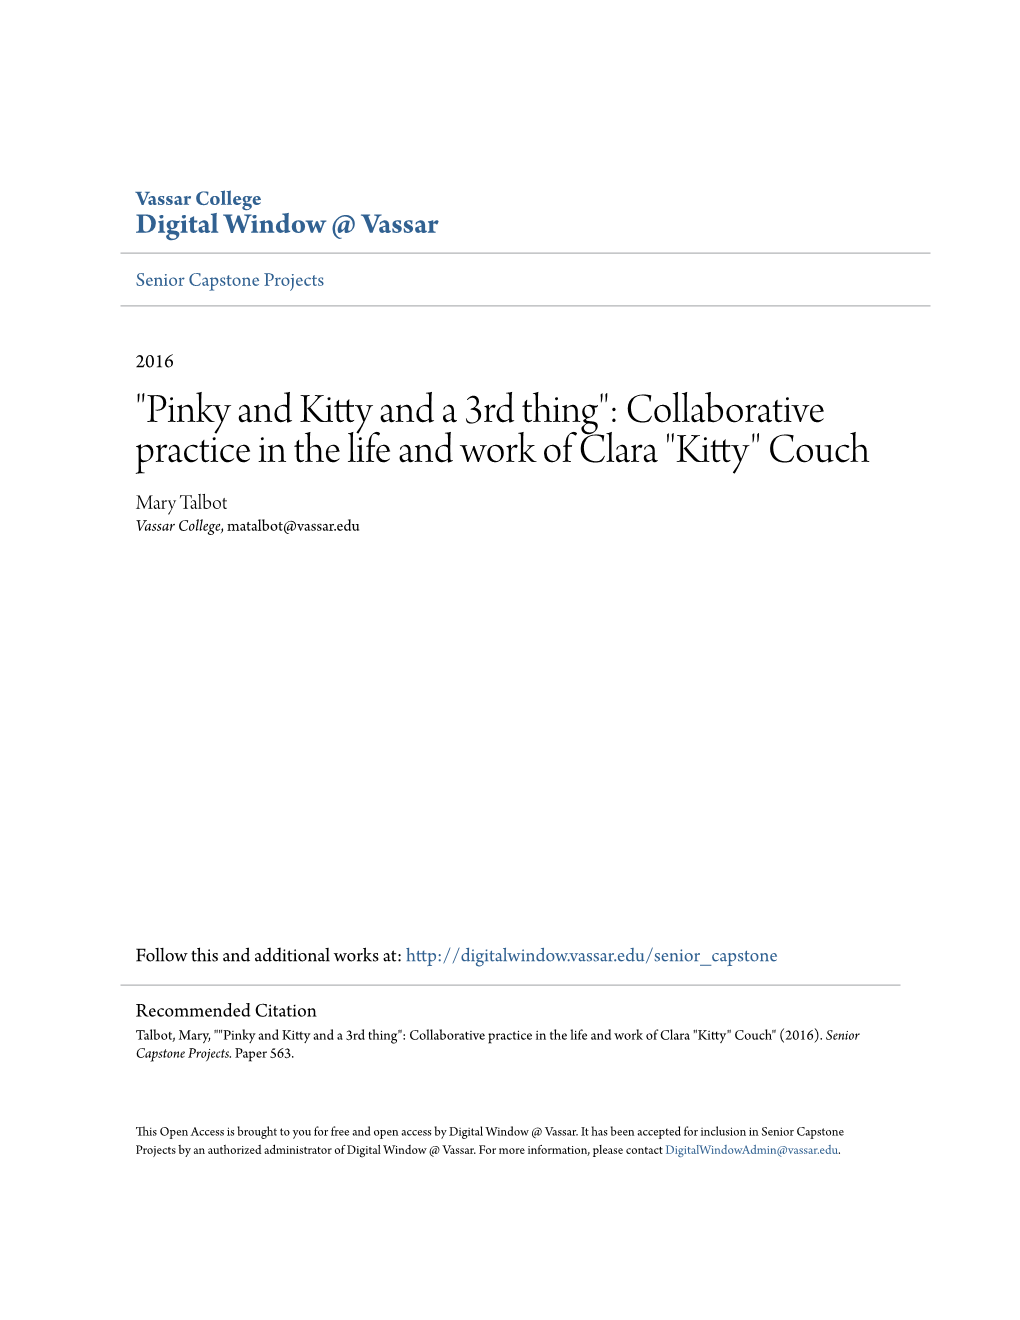 "Kitty" Couch Mary Talbot Vassar College, Matalbot@Vassar.Edu